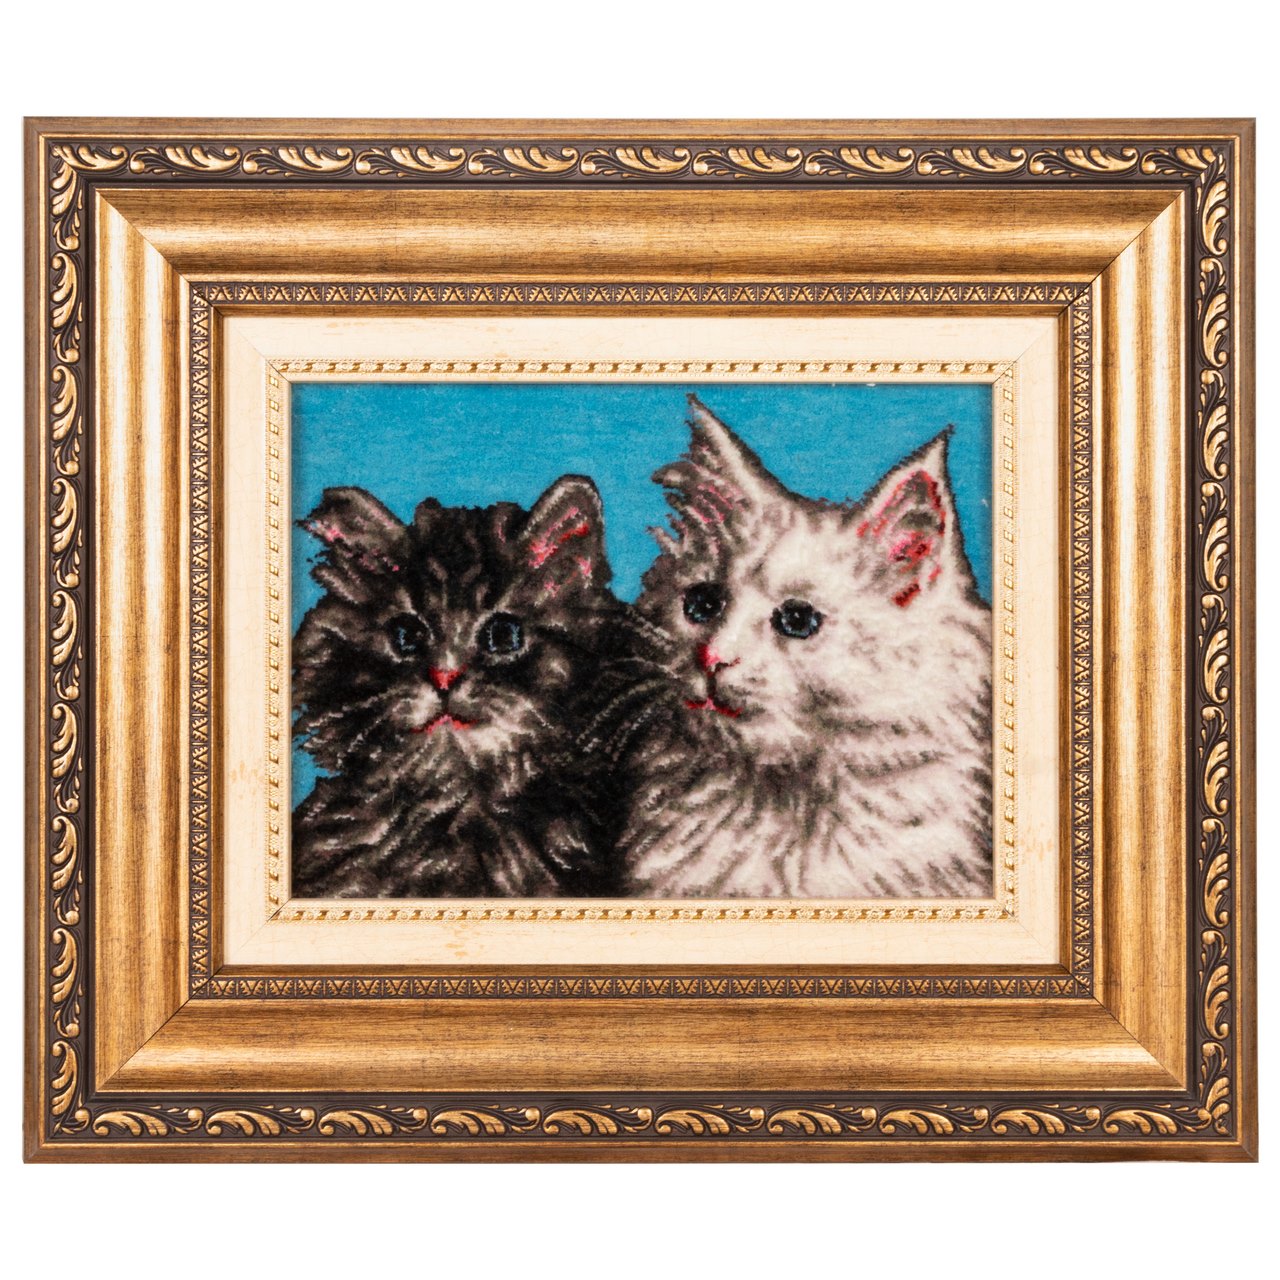 تابلو فرش دستباف سی پرشیا مدل دو بچه گربه کد 902891